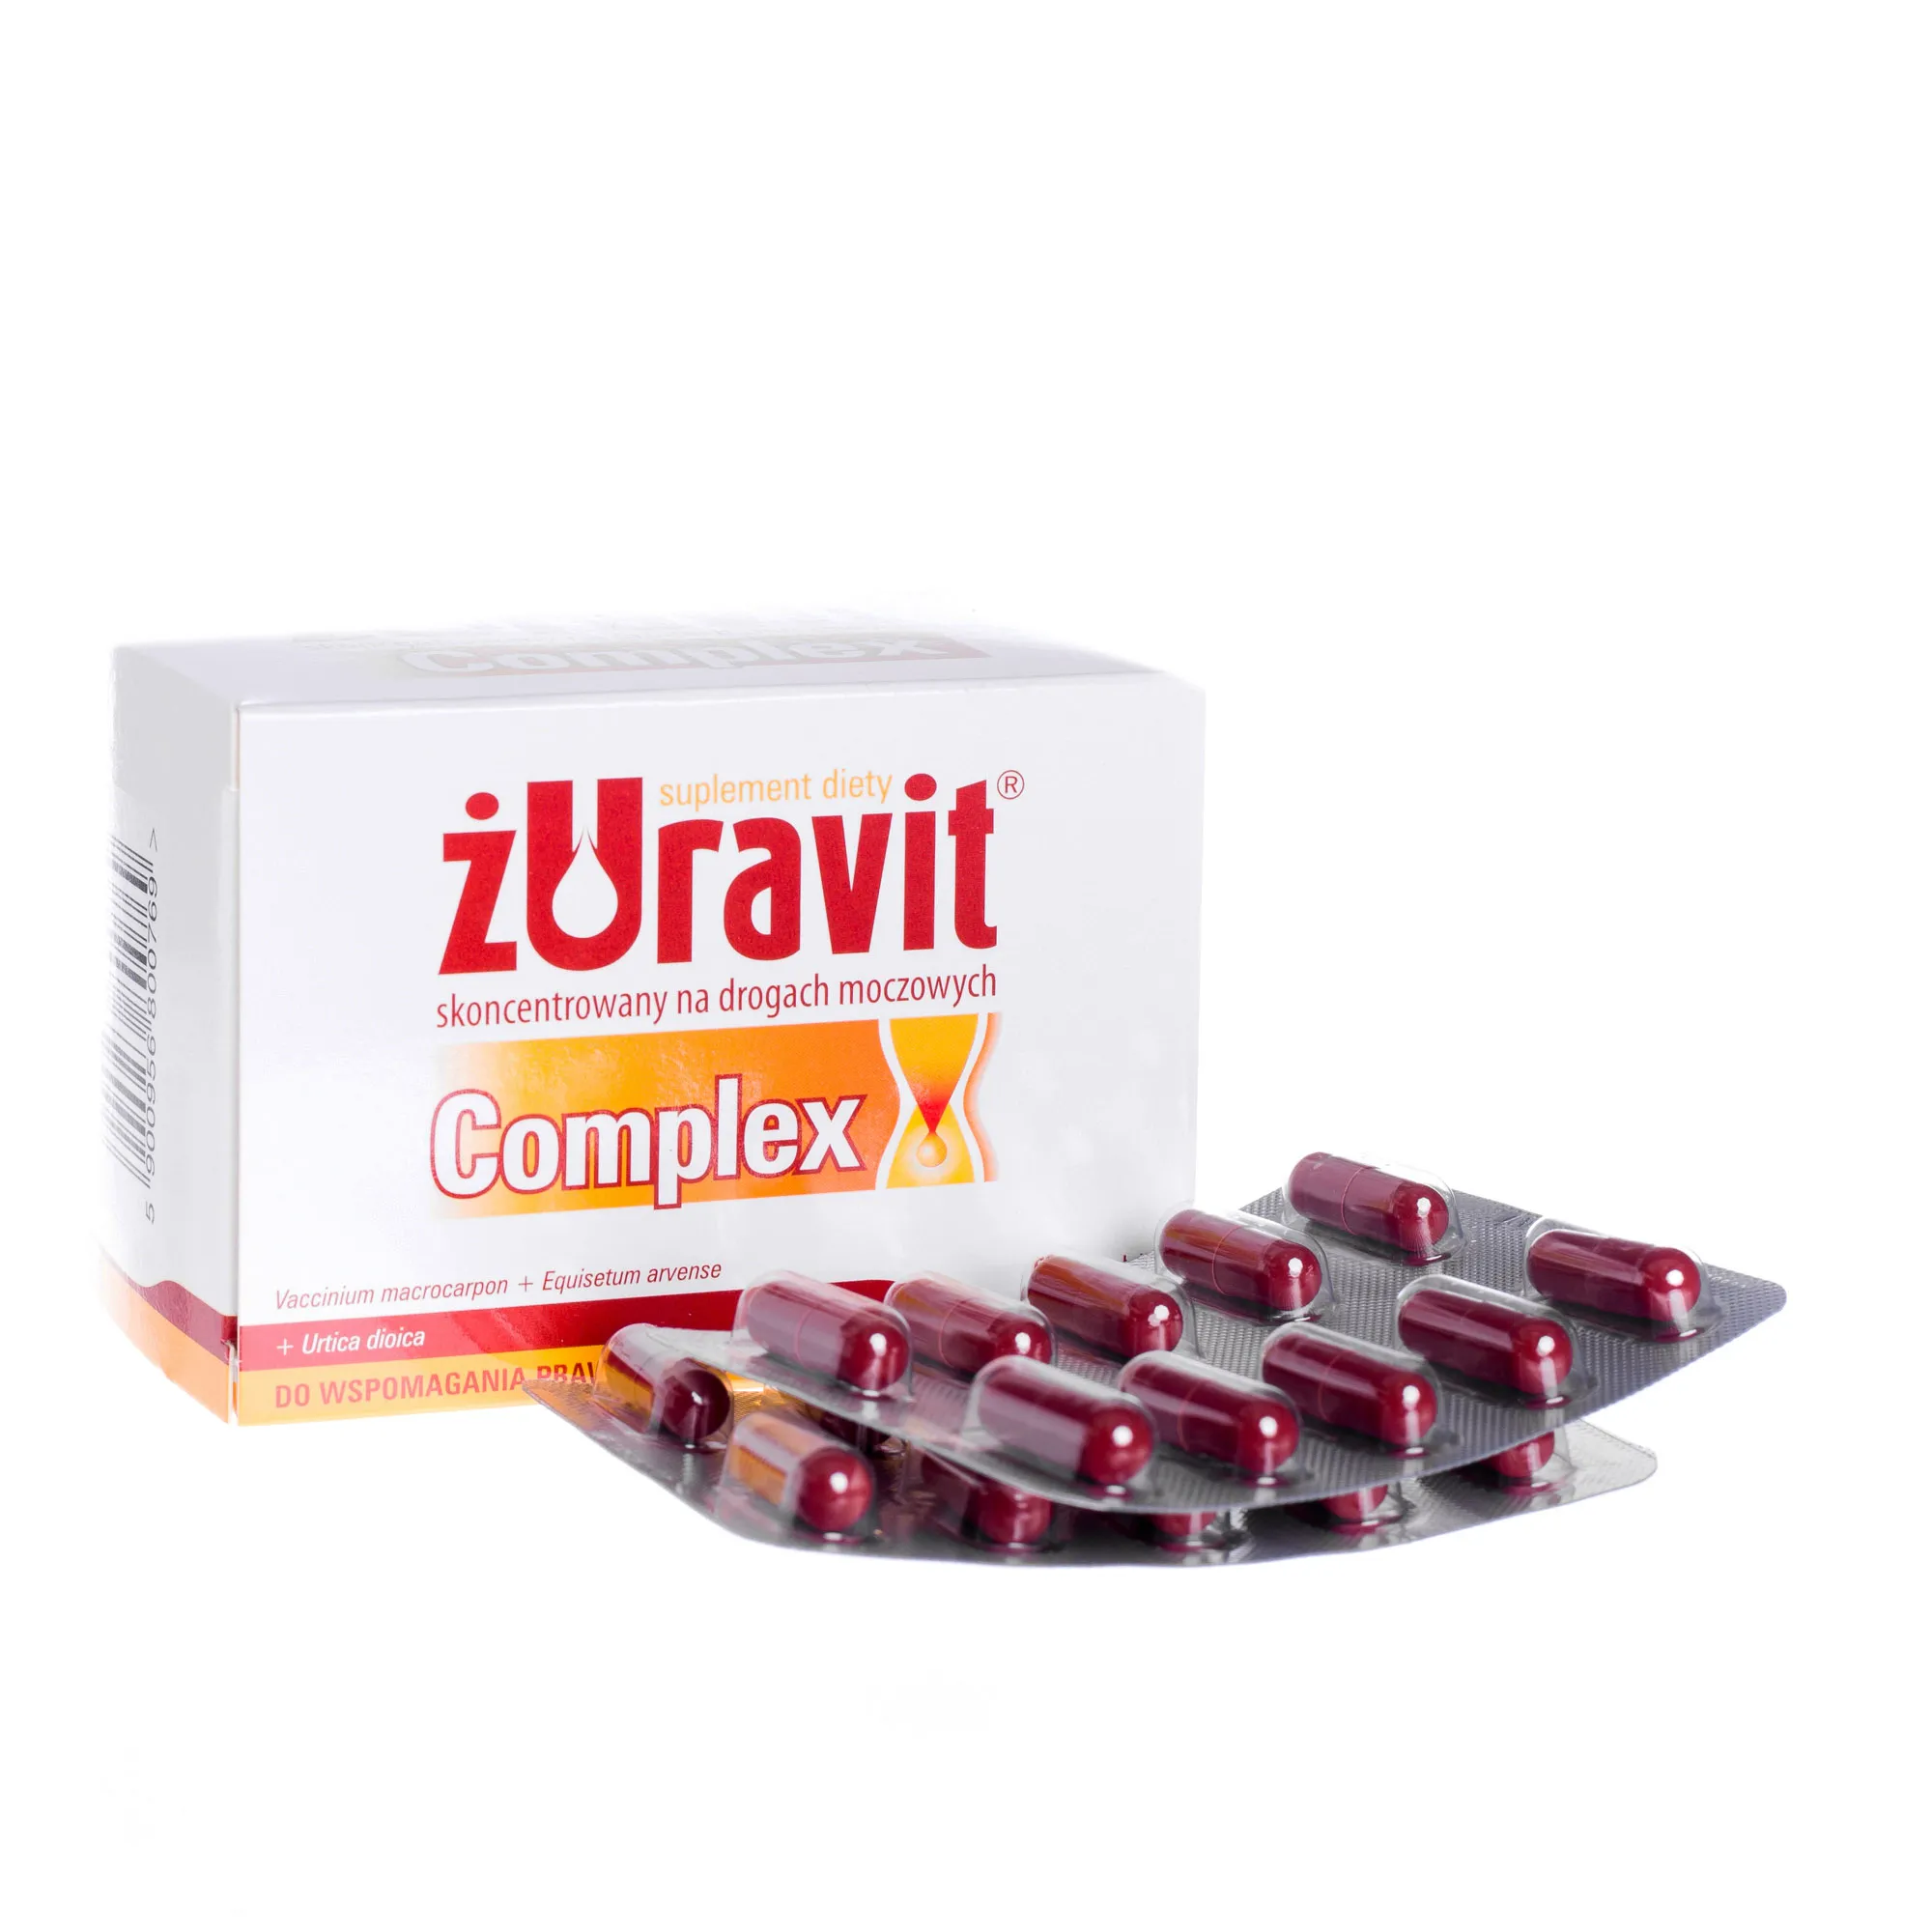 Żuravit Complex, 60 tabletek